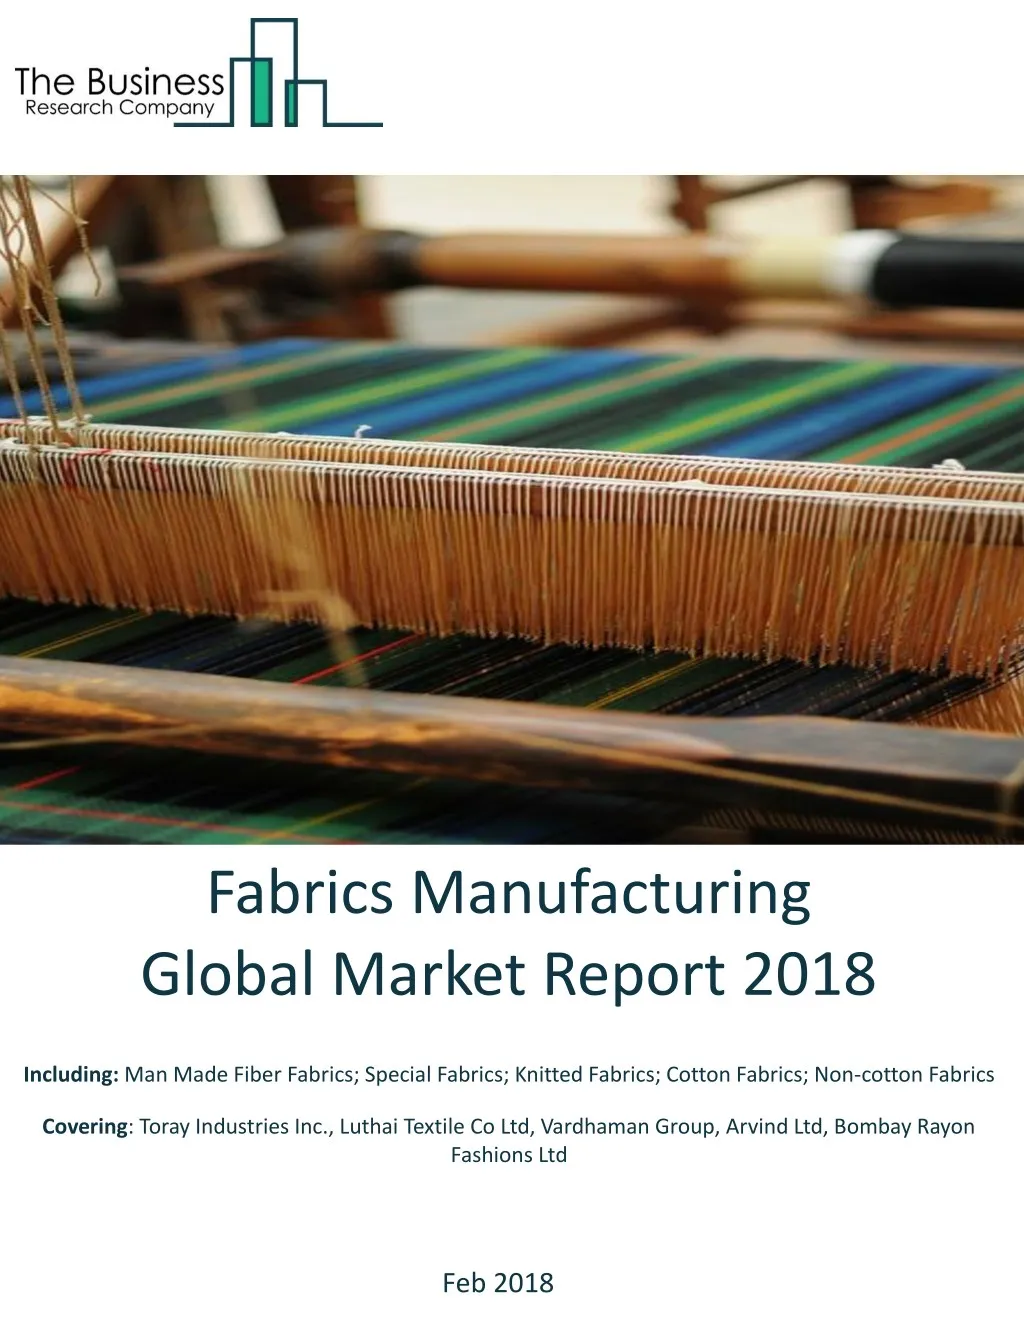 fabrics manufacturing global market report 2018